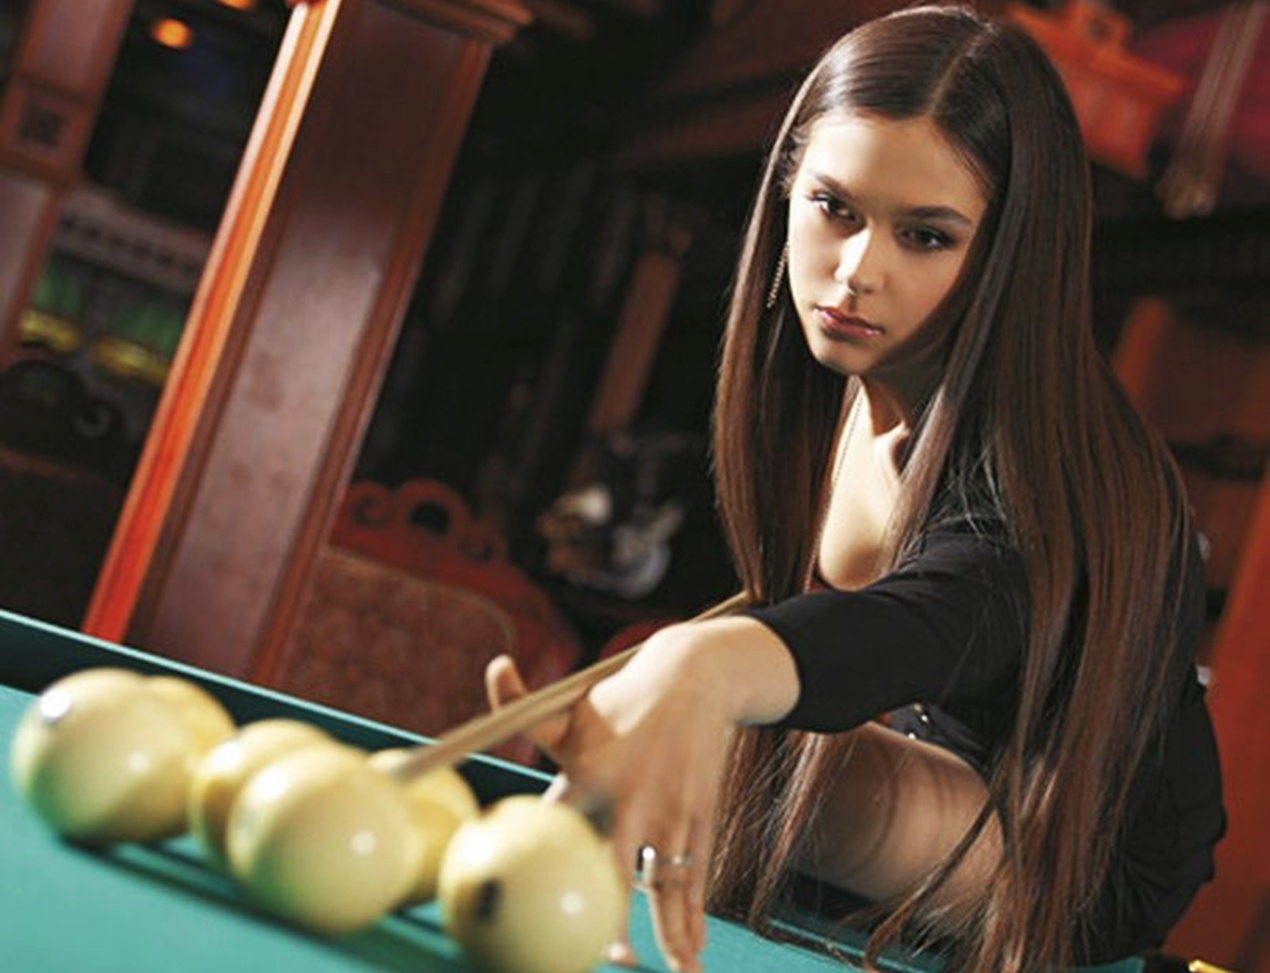 Mature babe billiards